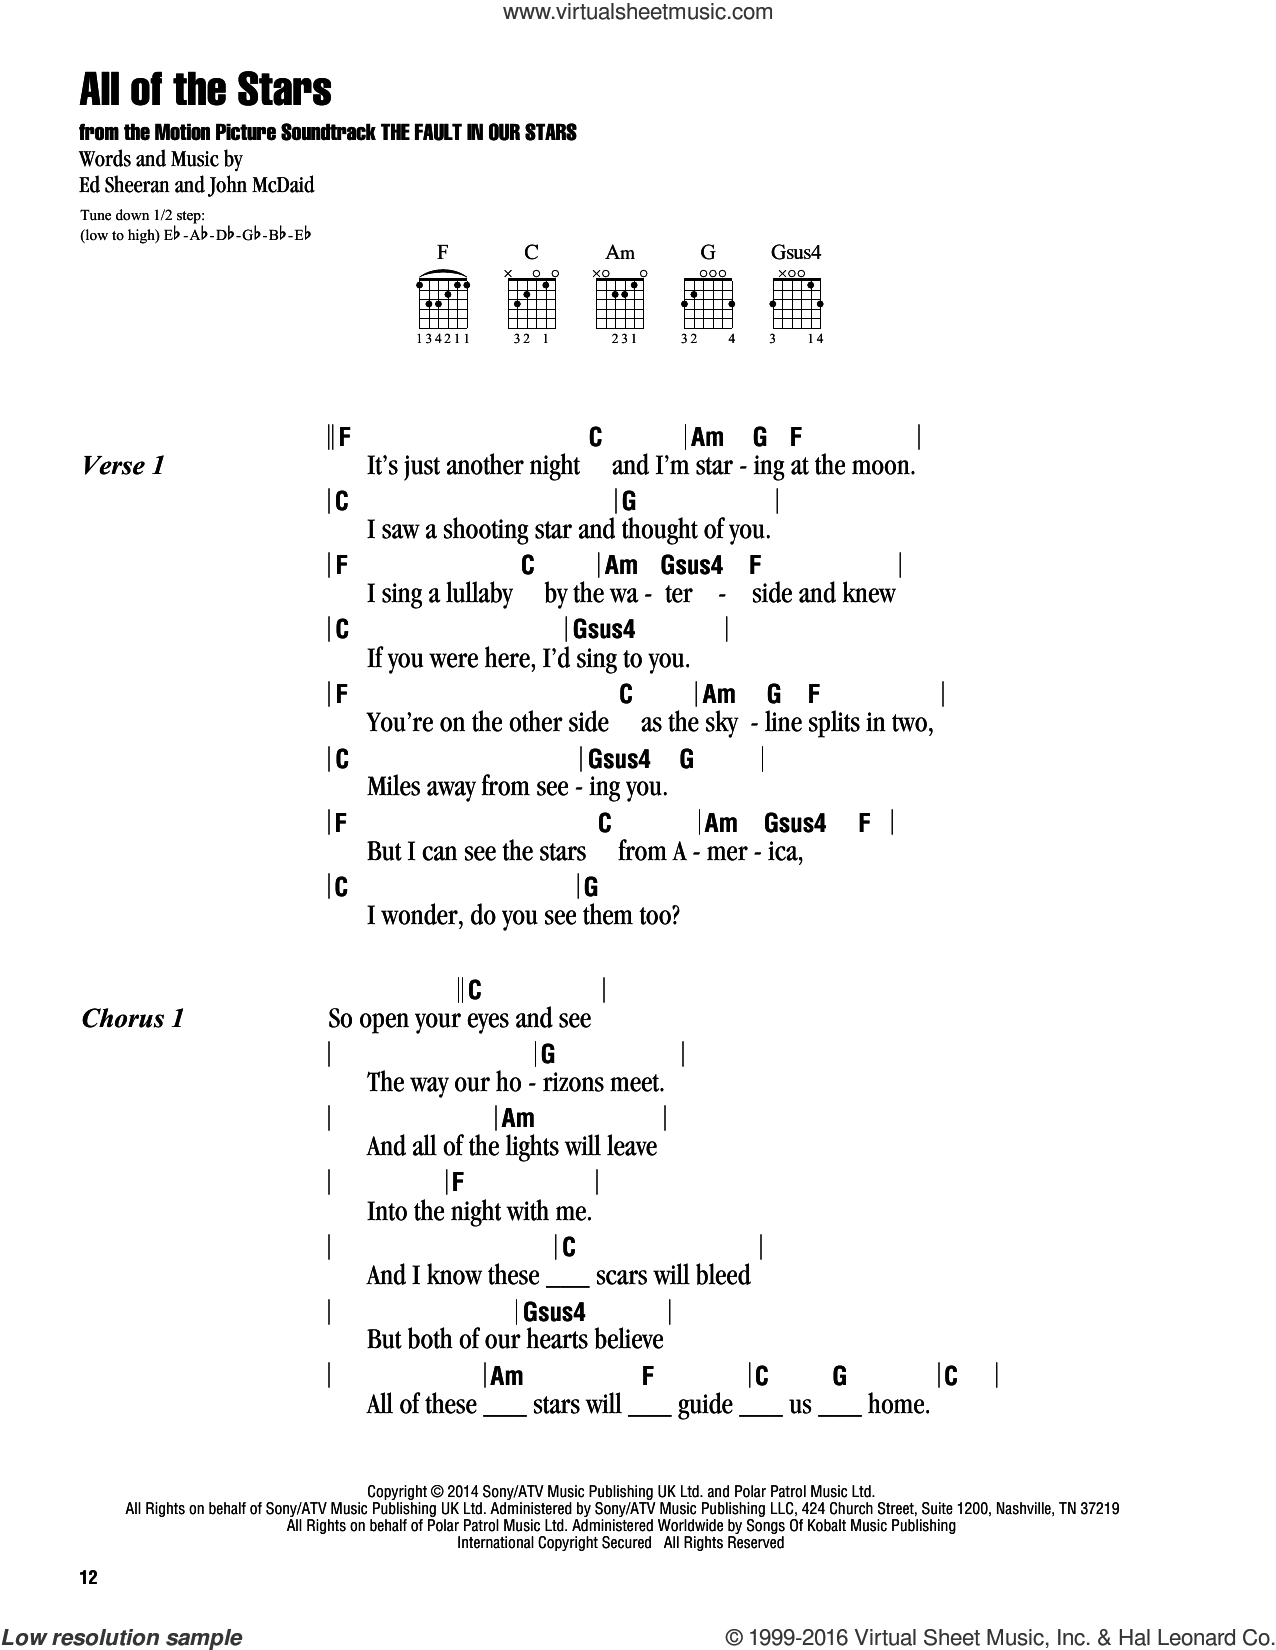 Sheeran - All Of The Stars sheet music for guitar (chords) [PDF]